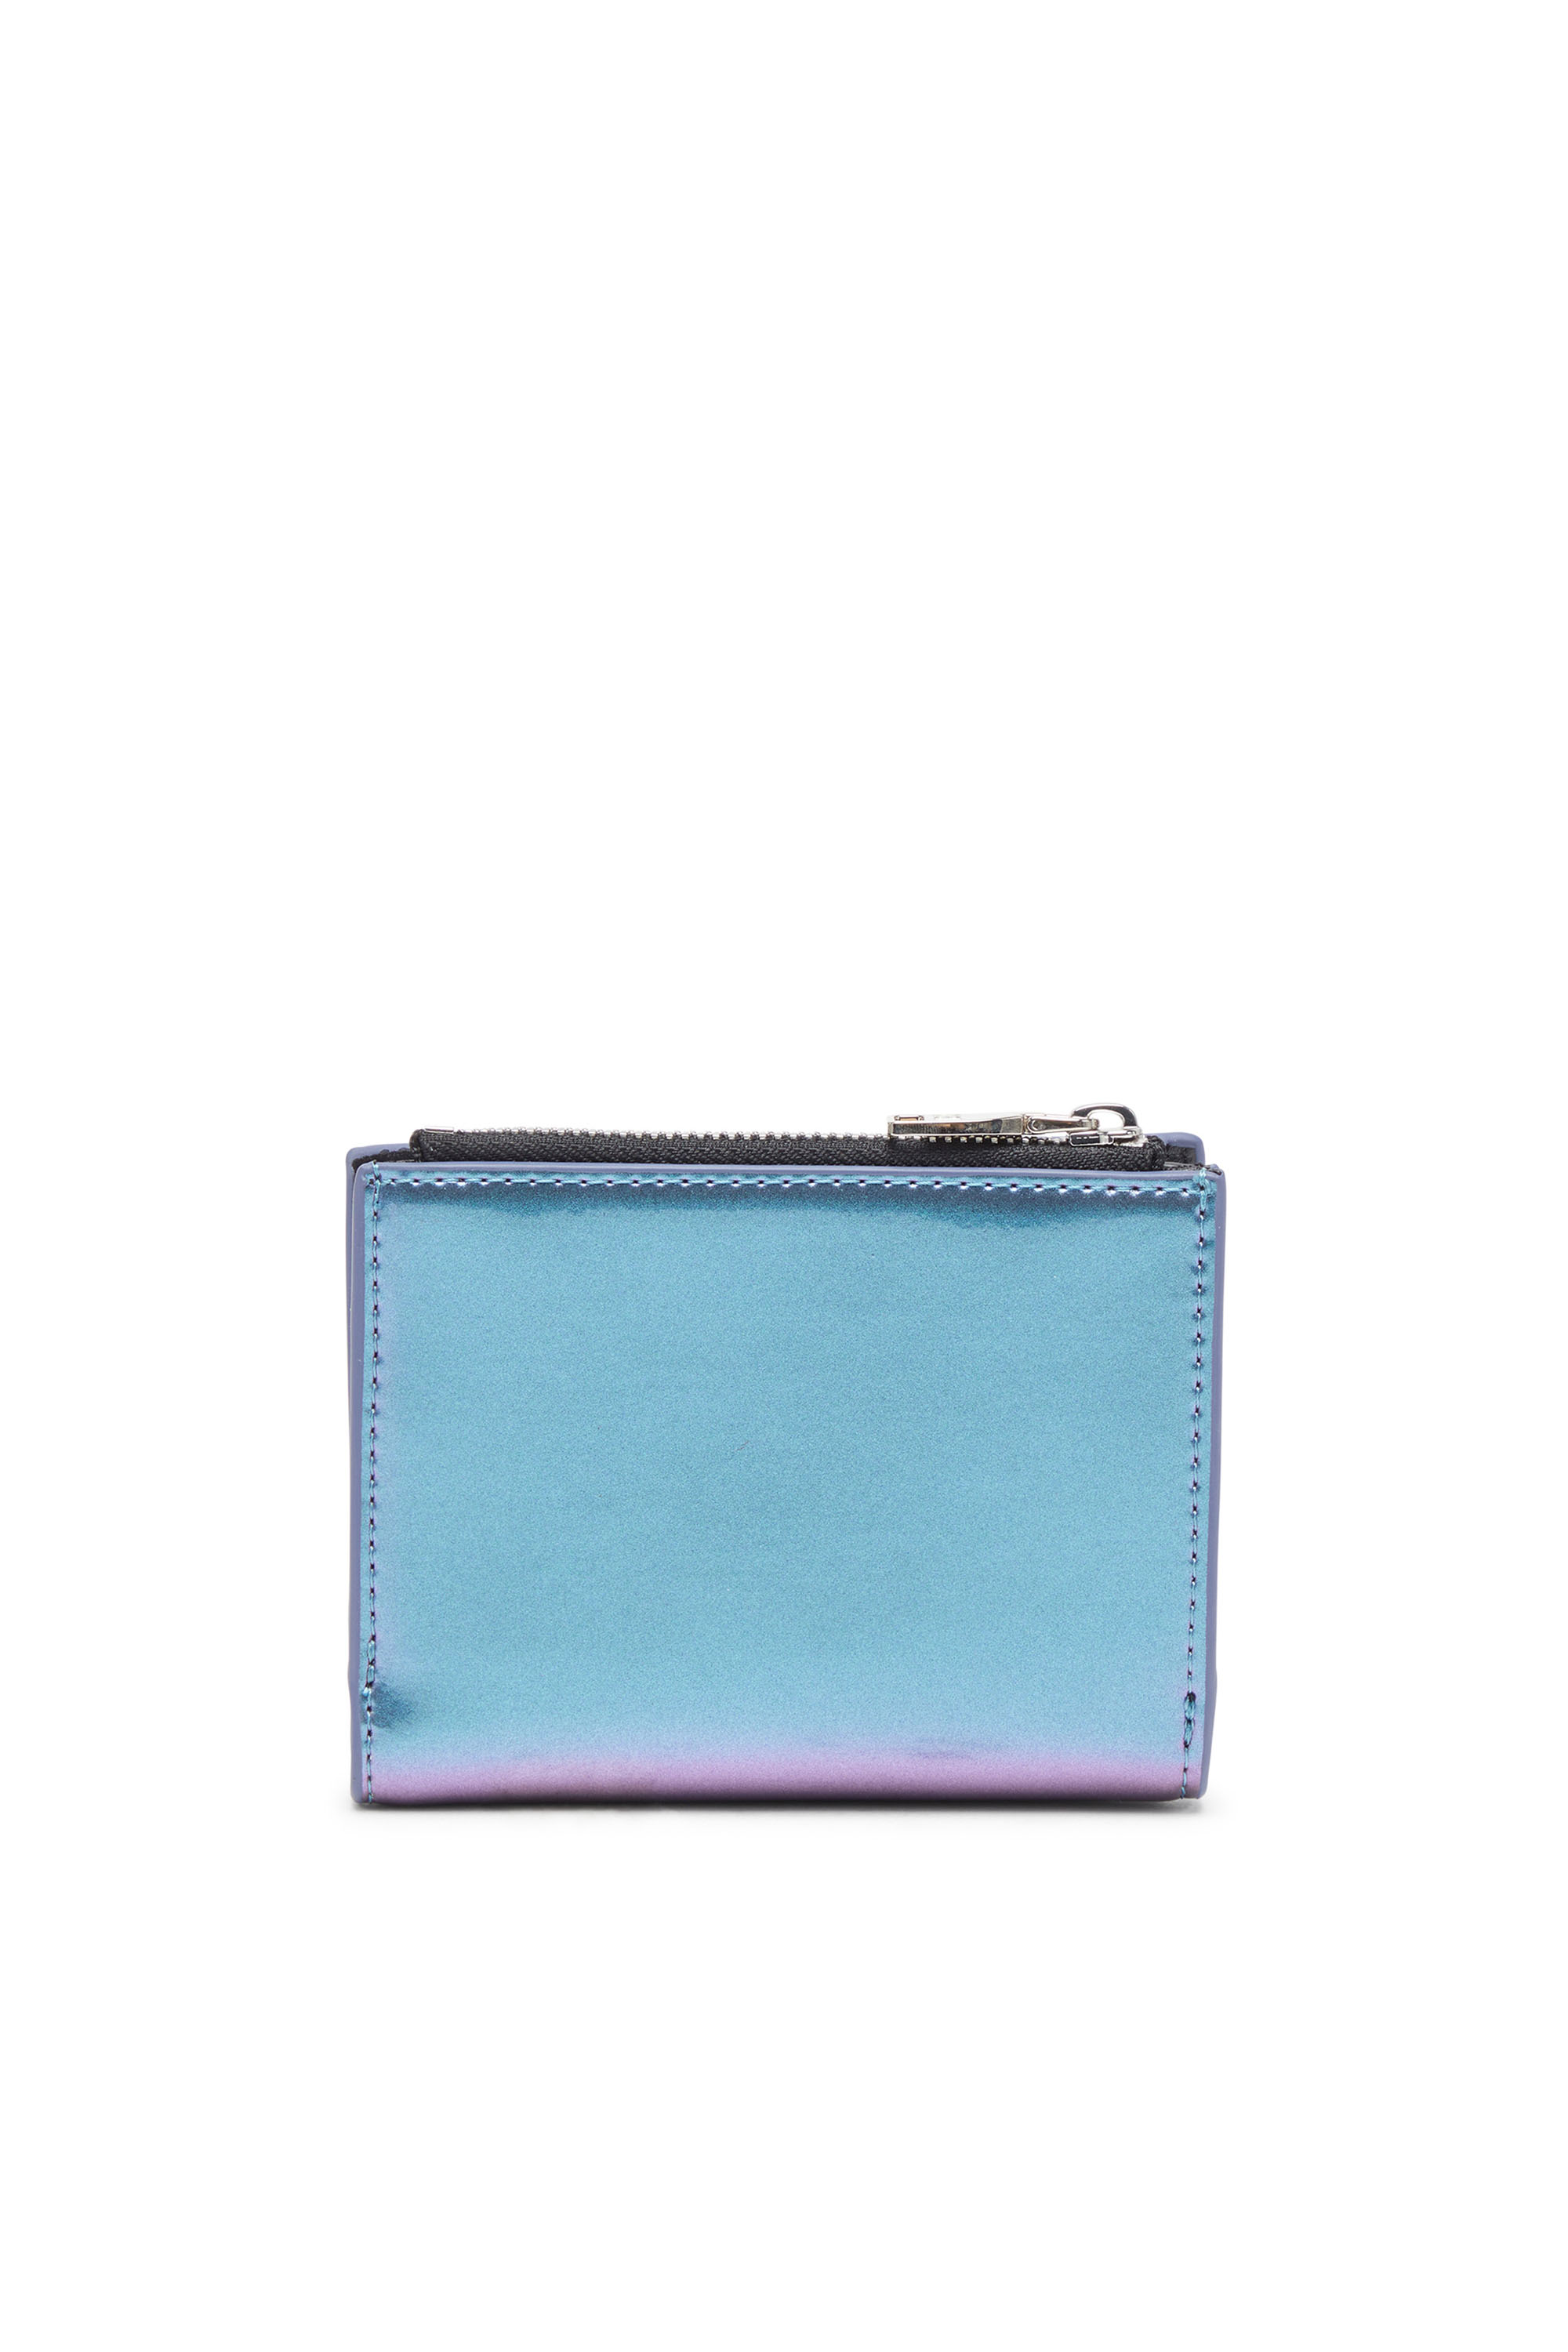 Diesel - 1DR BI-FOLD ZIP II, Woman Small iridescent wallet in Blue - Image 2